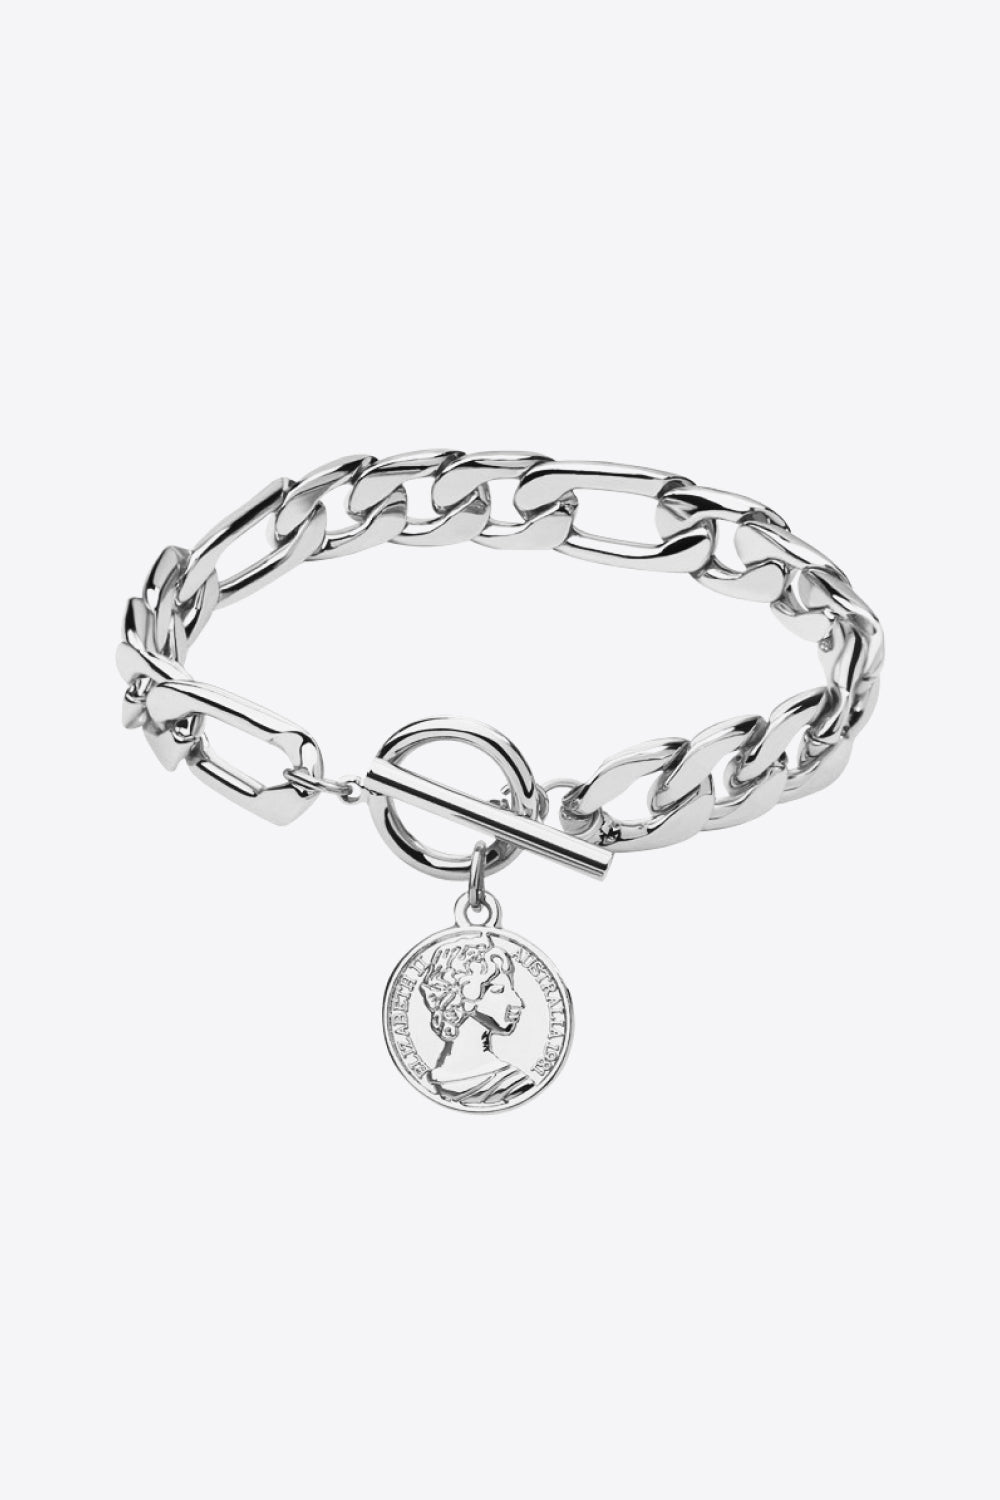 Chunky Chain Toggle Clasp Bracelet - Silver / One Size - Women’s Jewelry - Bracelets - 4 - 2024